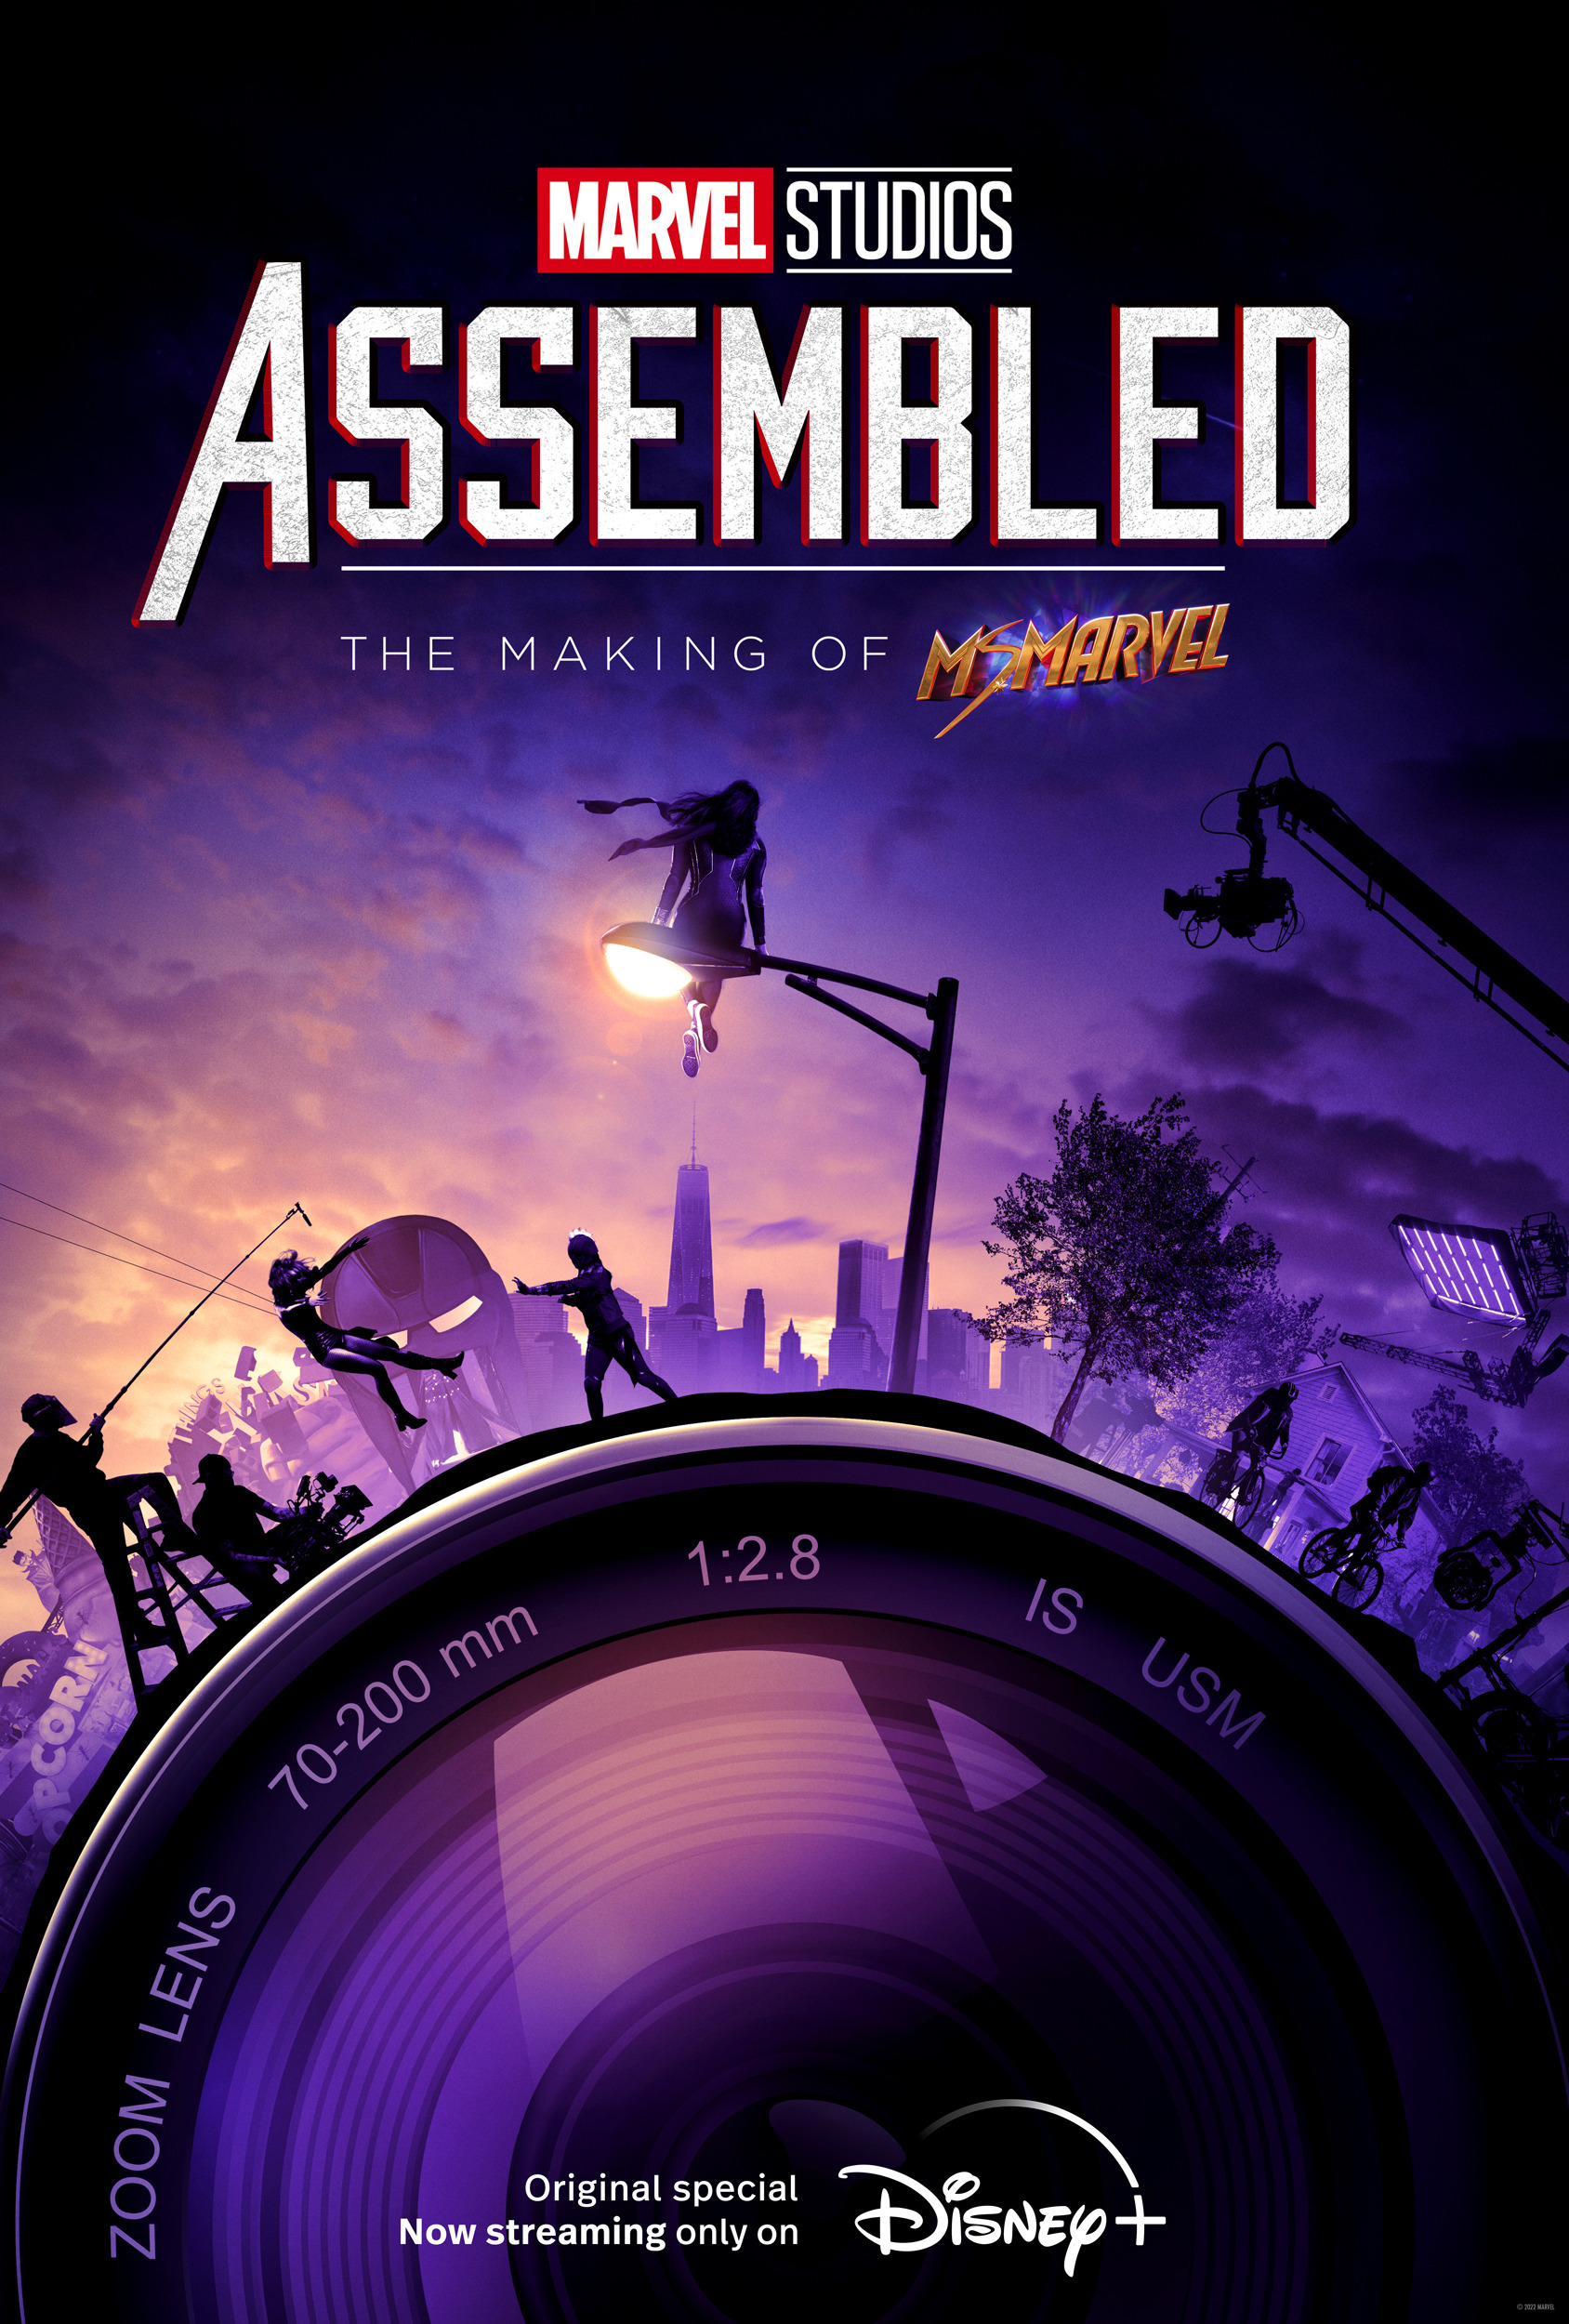 Mega Sized TV Poster Image for Marvel Studios: Assembled (#11 of 20)